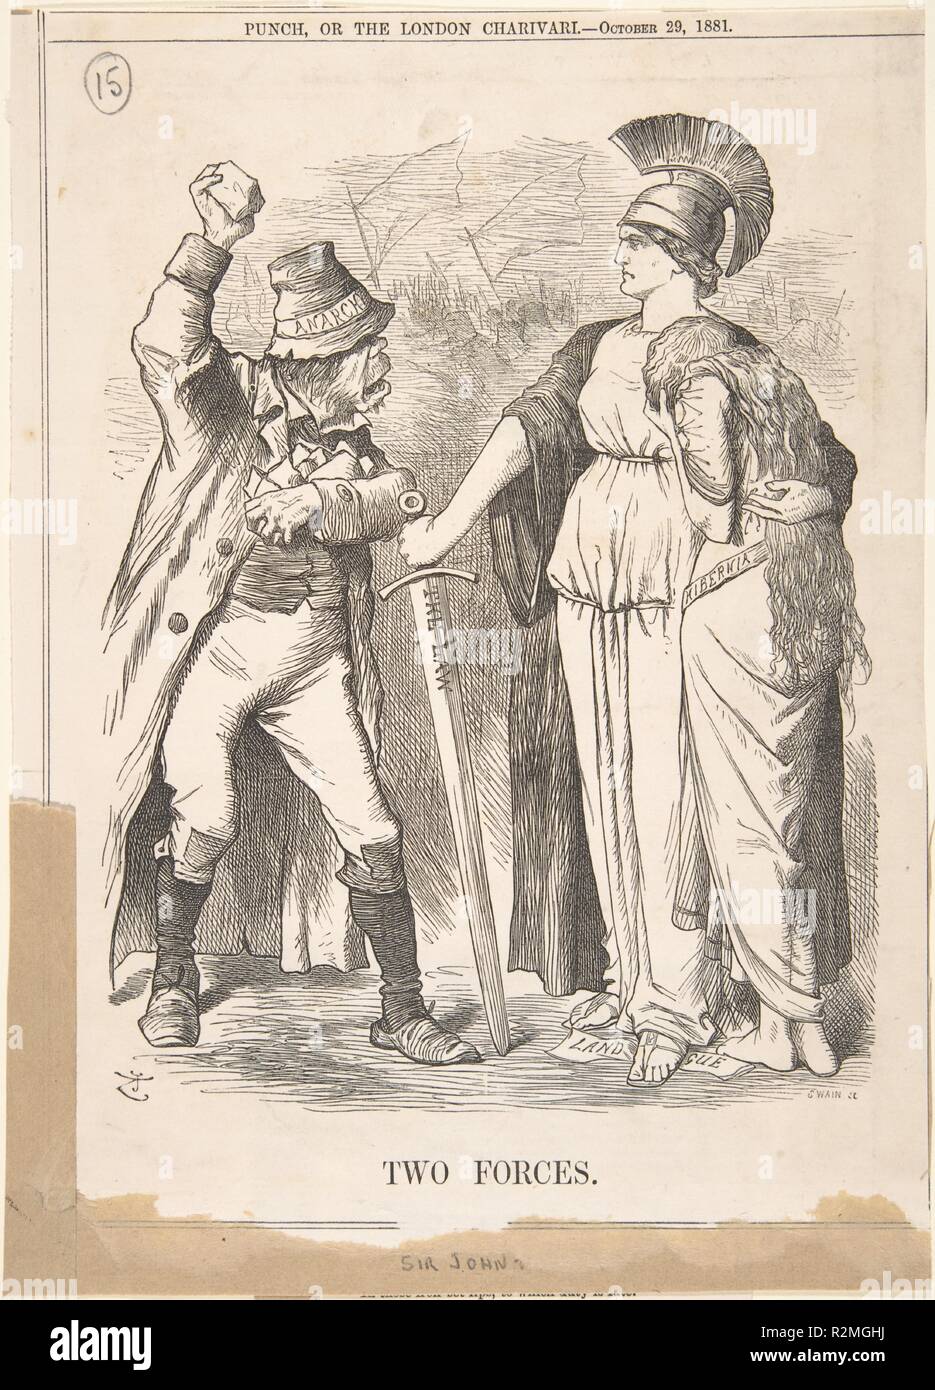 Two Forces (Punch, October 29, 1881). Artist: Sir John Tenniel (British, London 1820-1914 London). Dimensions: Sheet: 10 1/4 x 7 3/8 in. (26 x 18.7 cm). Date: 1881. Museum: Metropolitan Museum of Art, New York, USA. Stock Photo